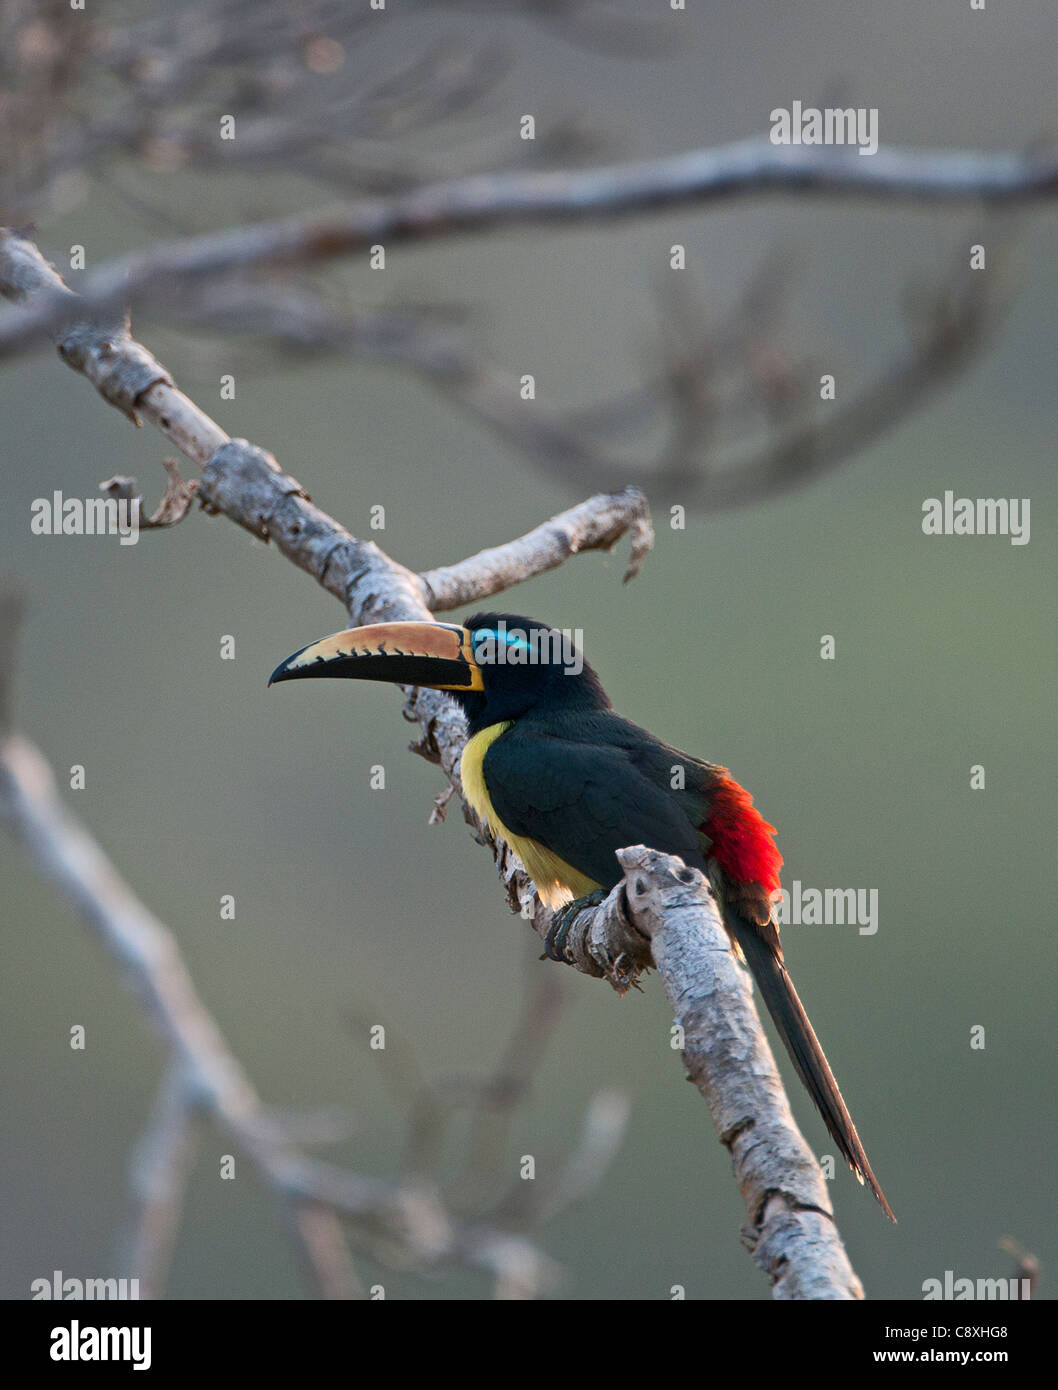 Toucan amazon peru -Fotos und -Bildmaterial in hoher Auflösung – Alamy